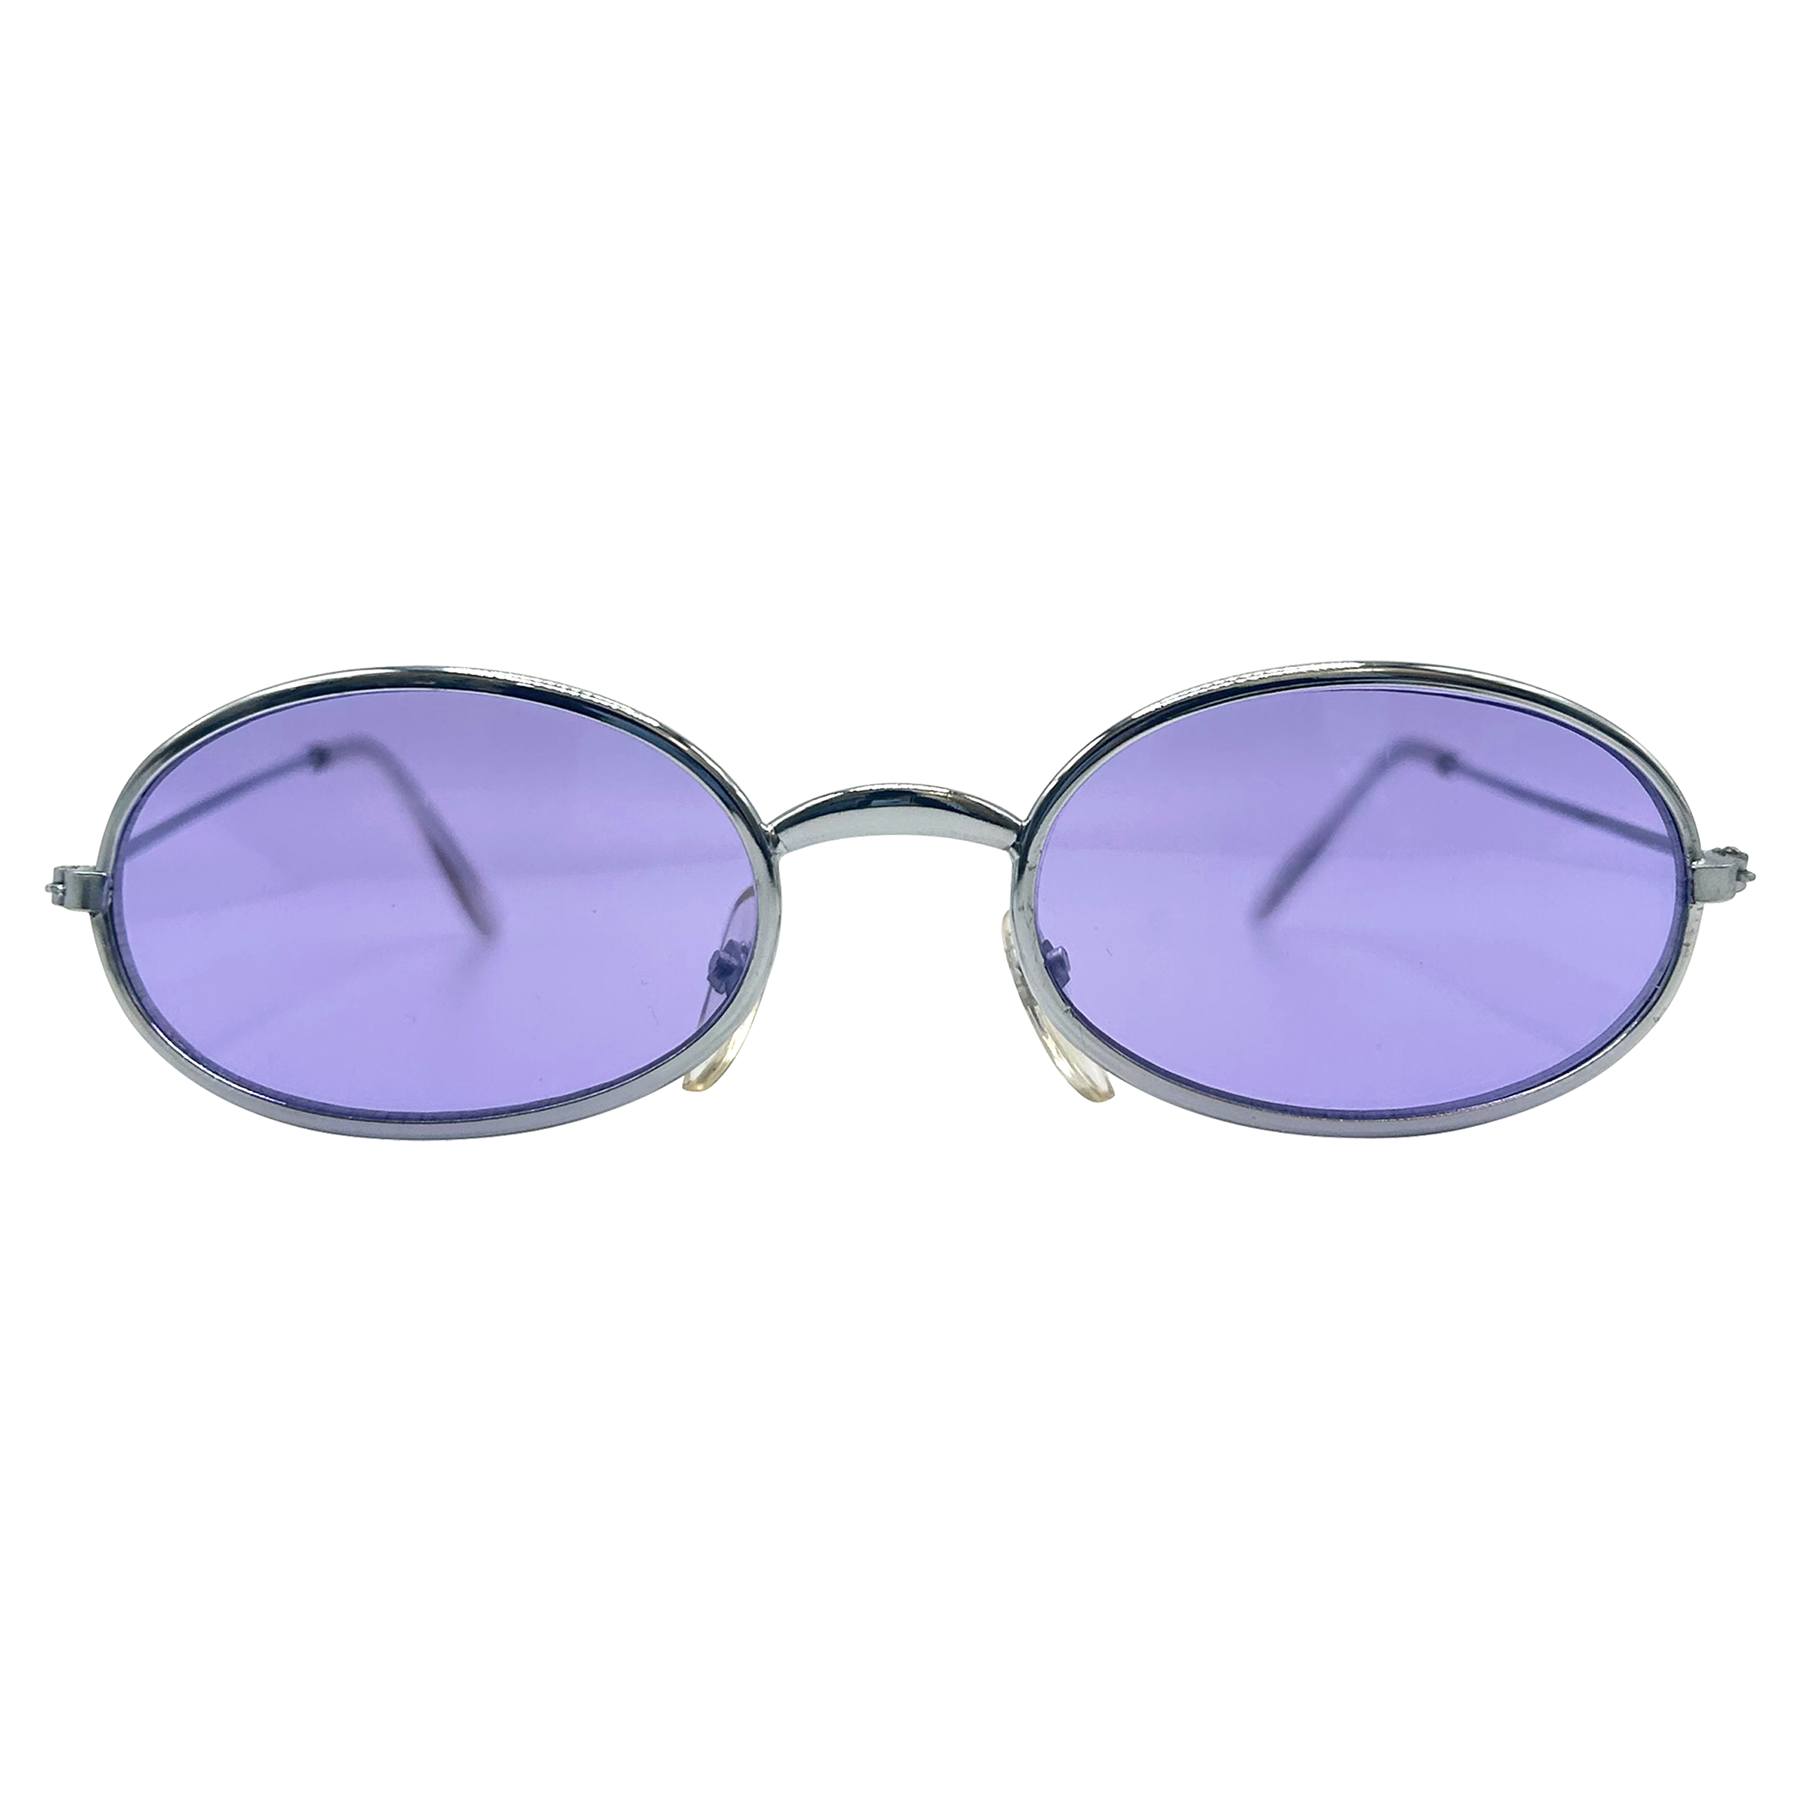 U-TURN Silver/Purple Oval Sunglasses